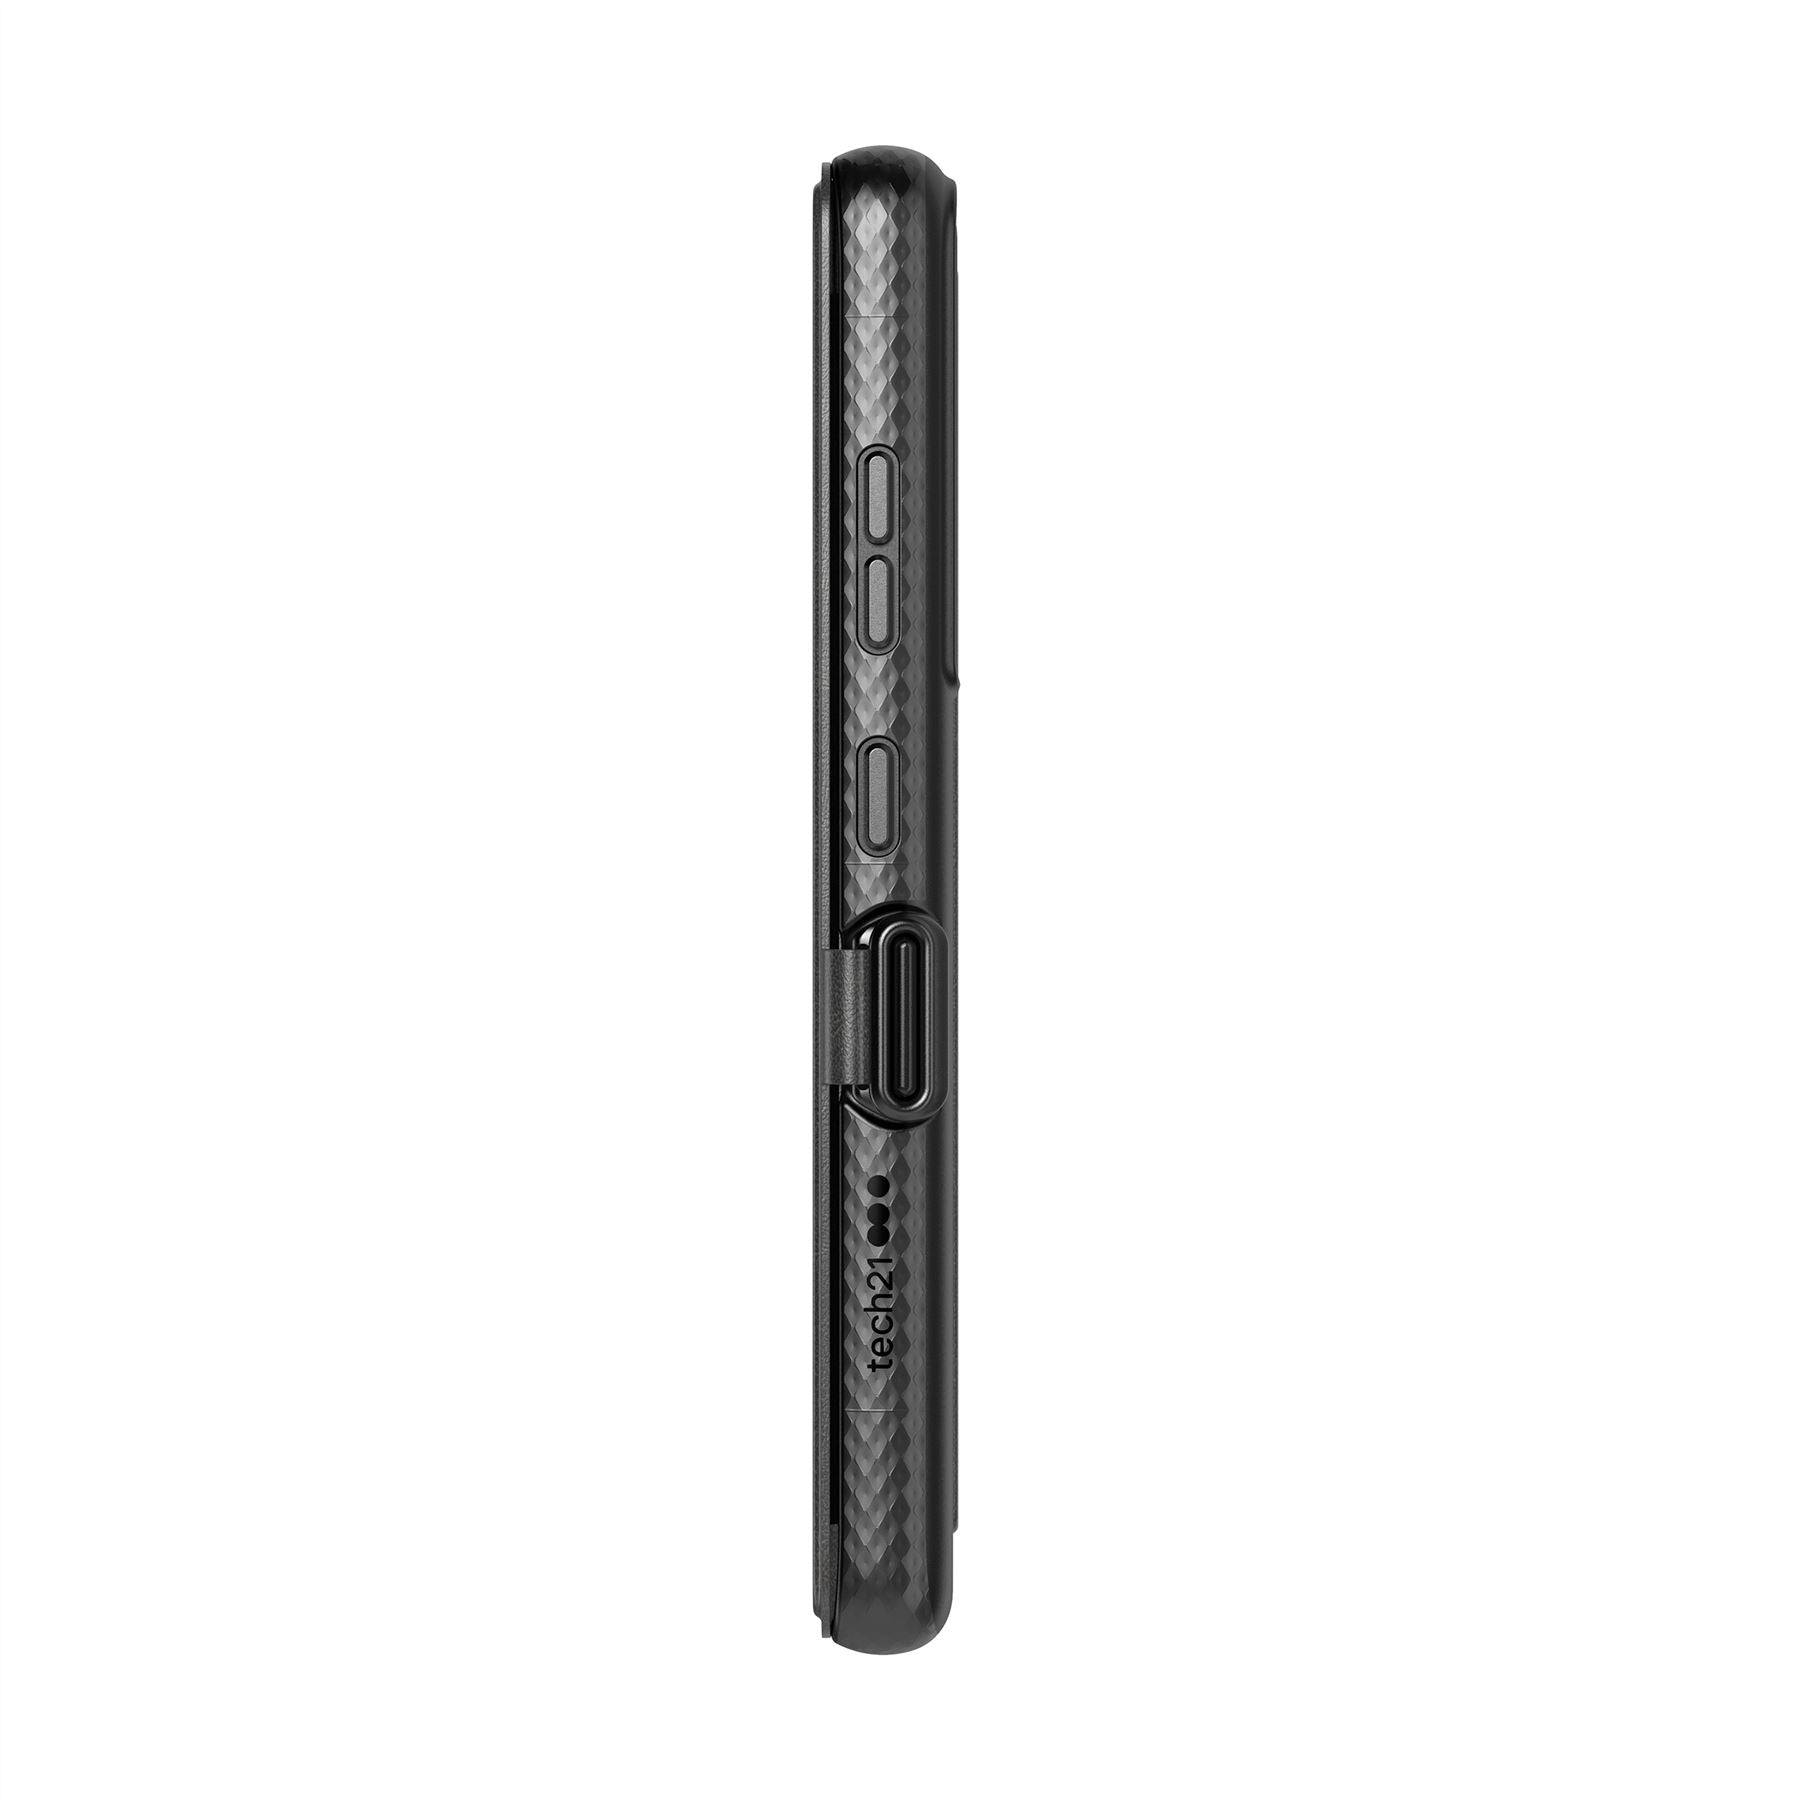 Evo Wallet - Samsung Galaxy S21 Ultra 5G Case - Smokey Black